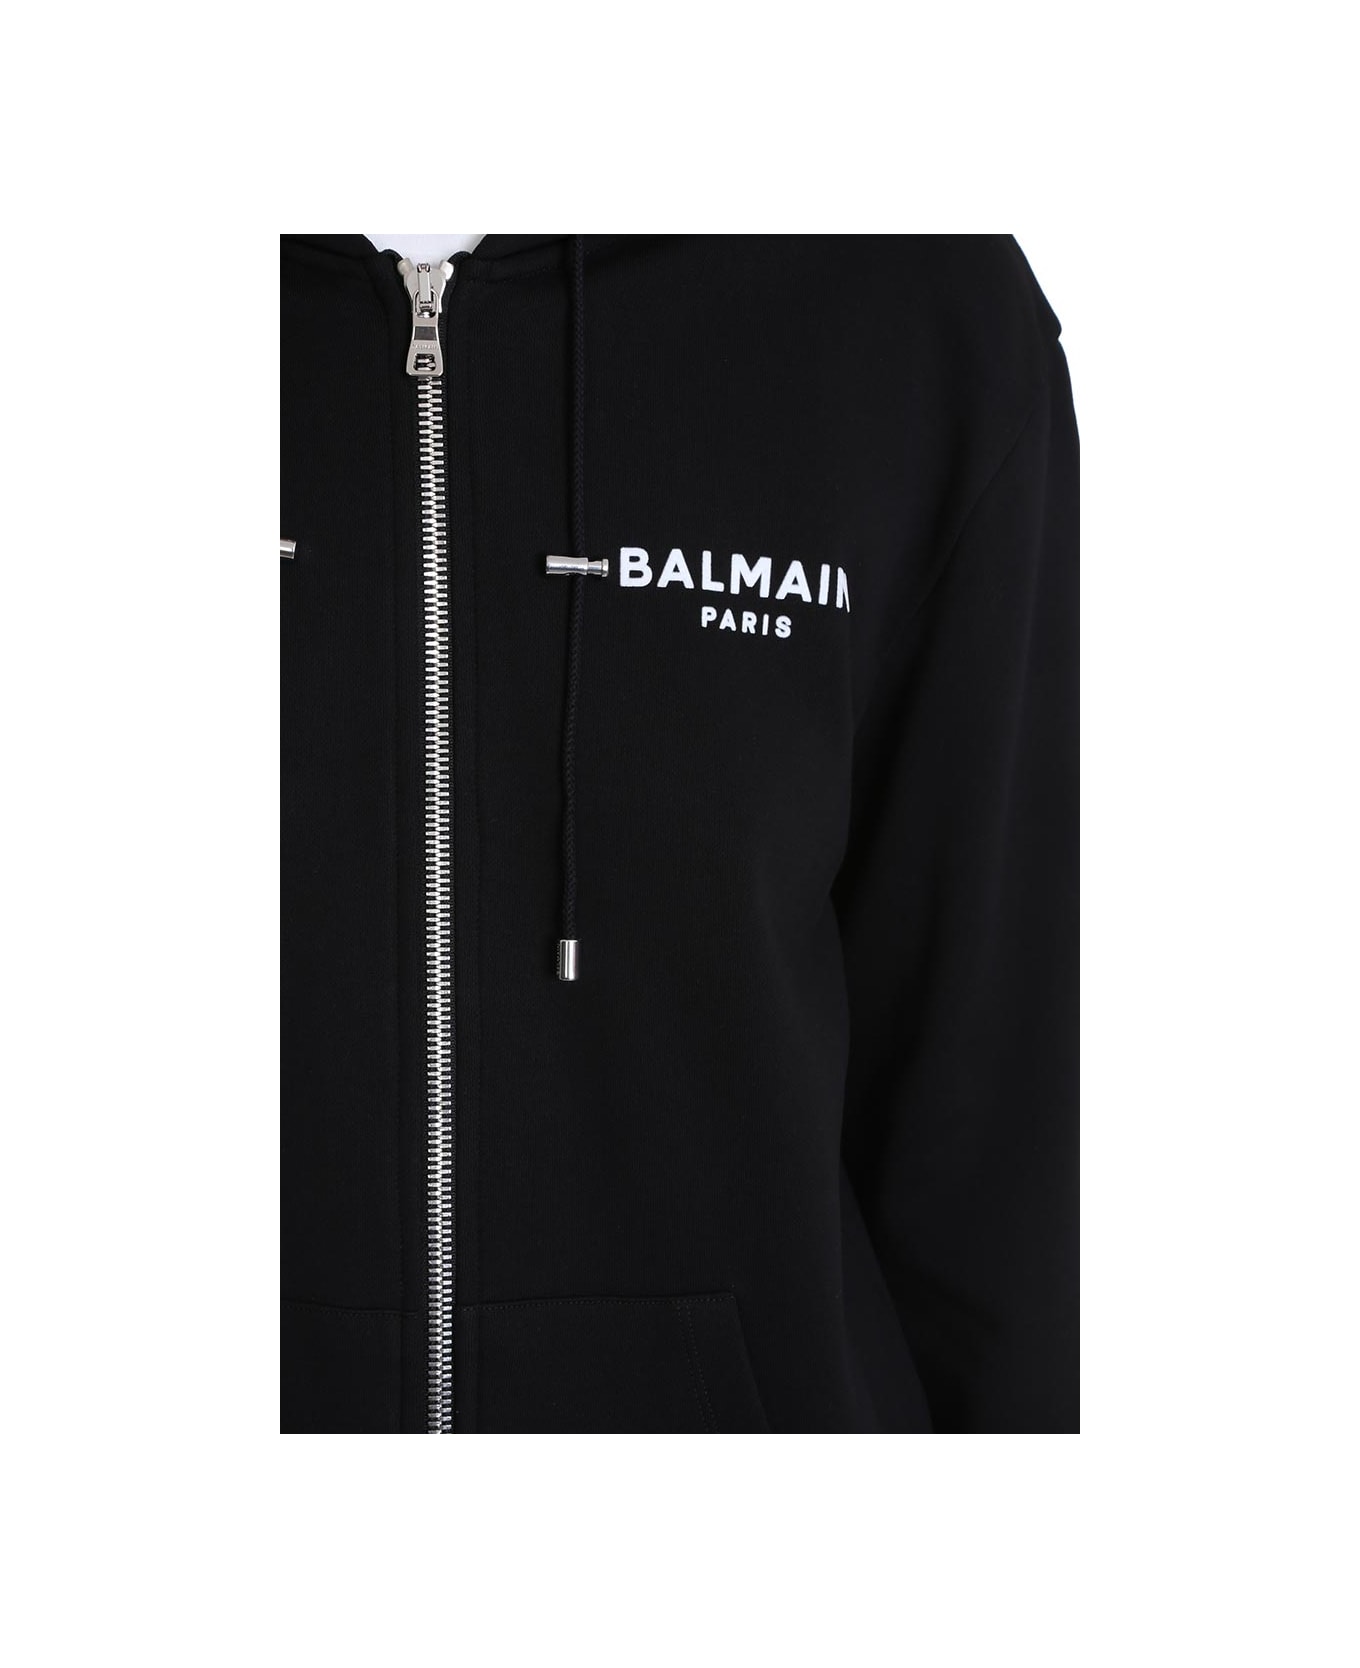 Balmain Sweatshirt In Black Cotton - Nero/bianco ジャケット